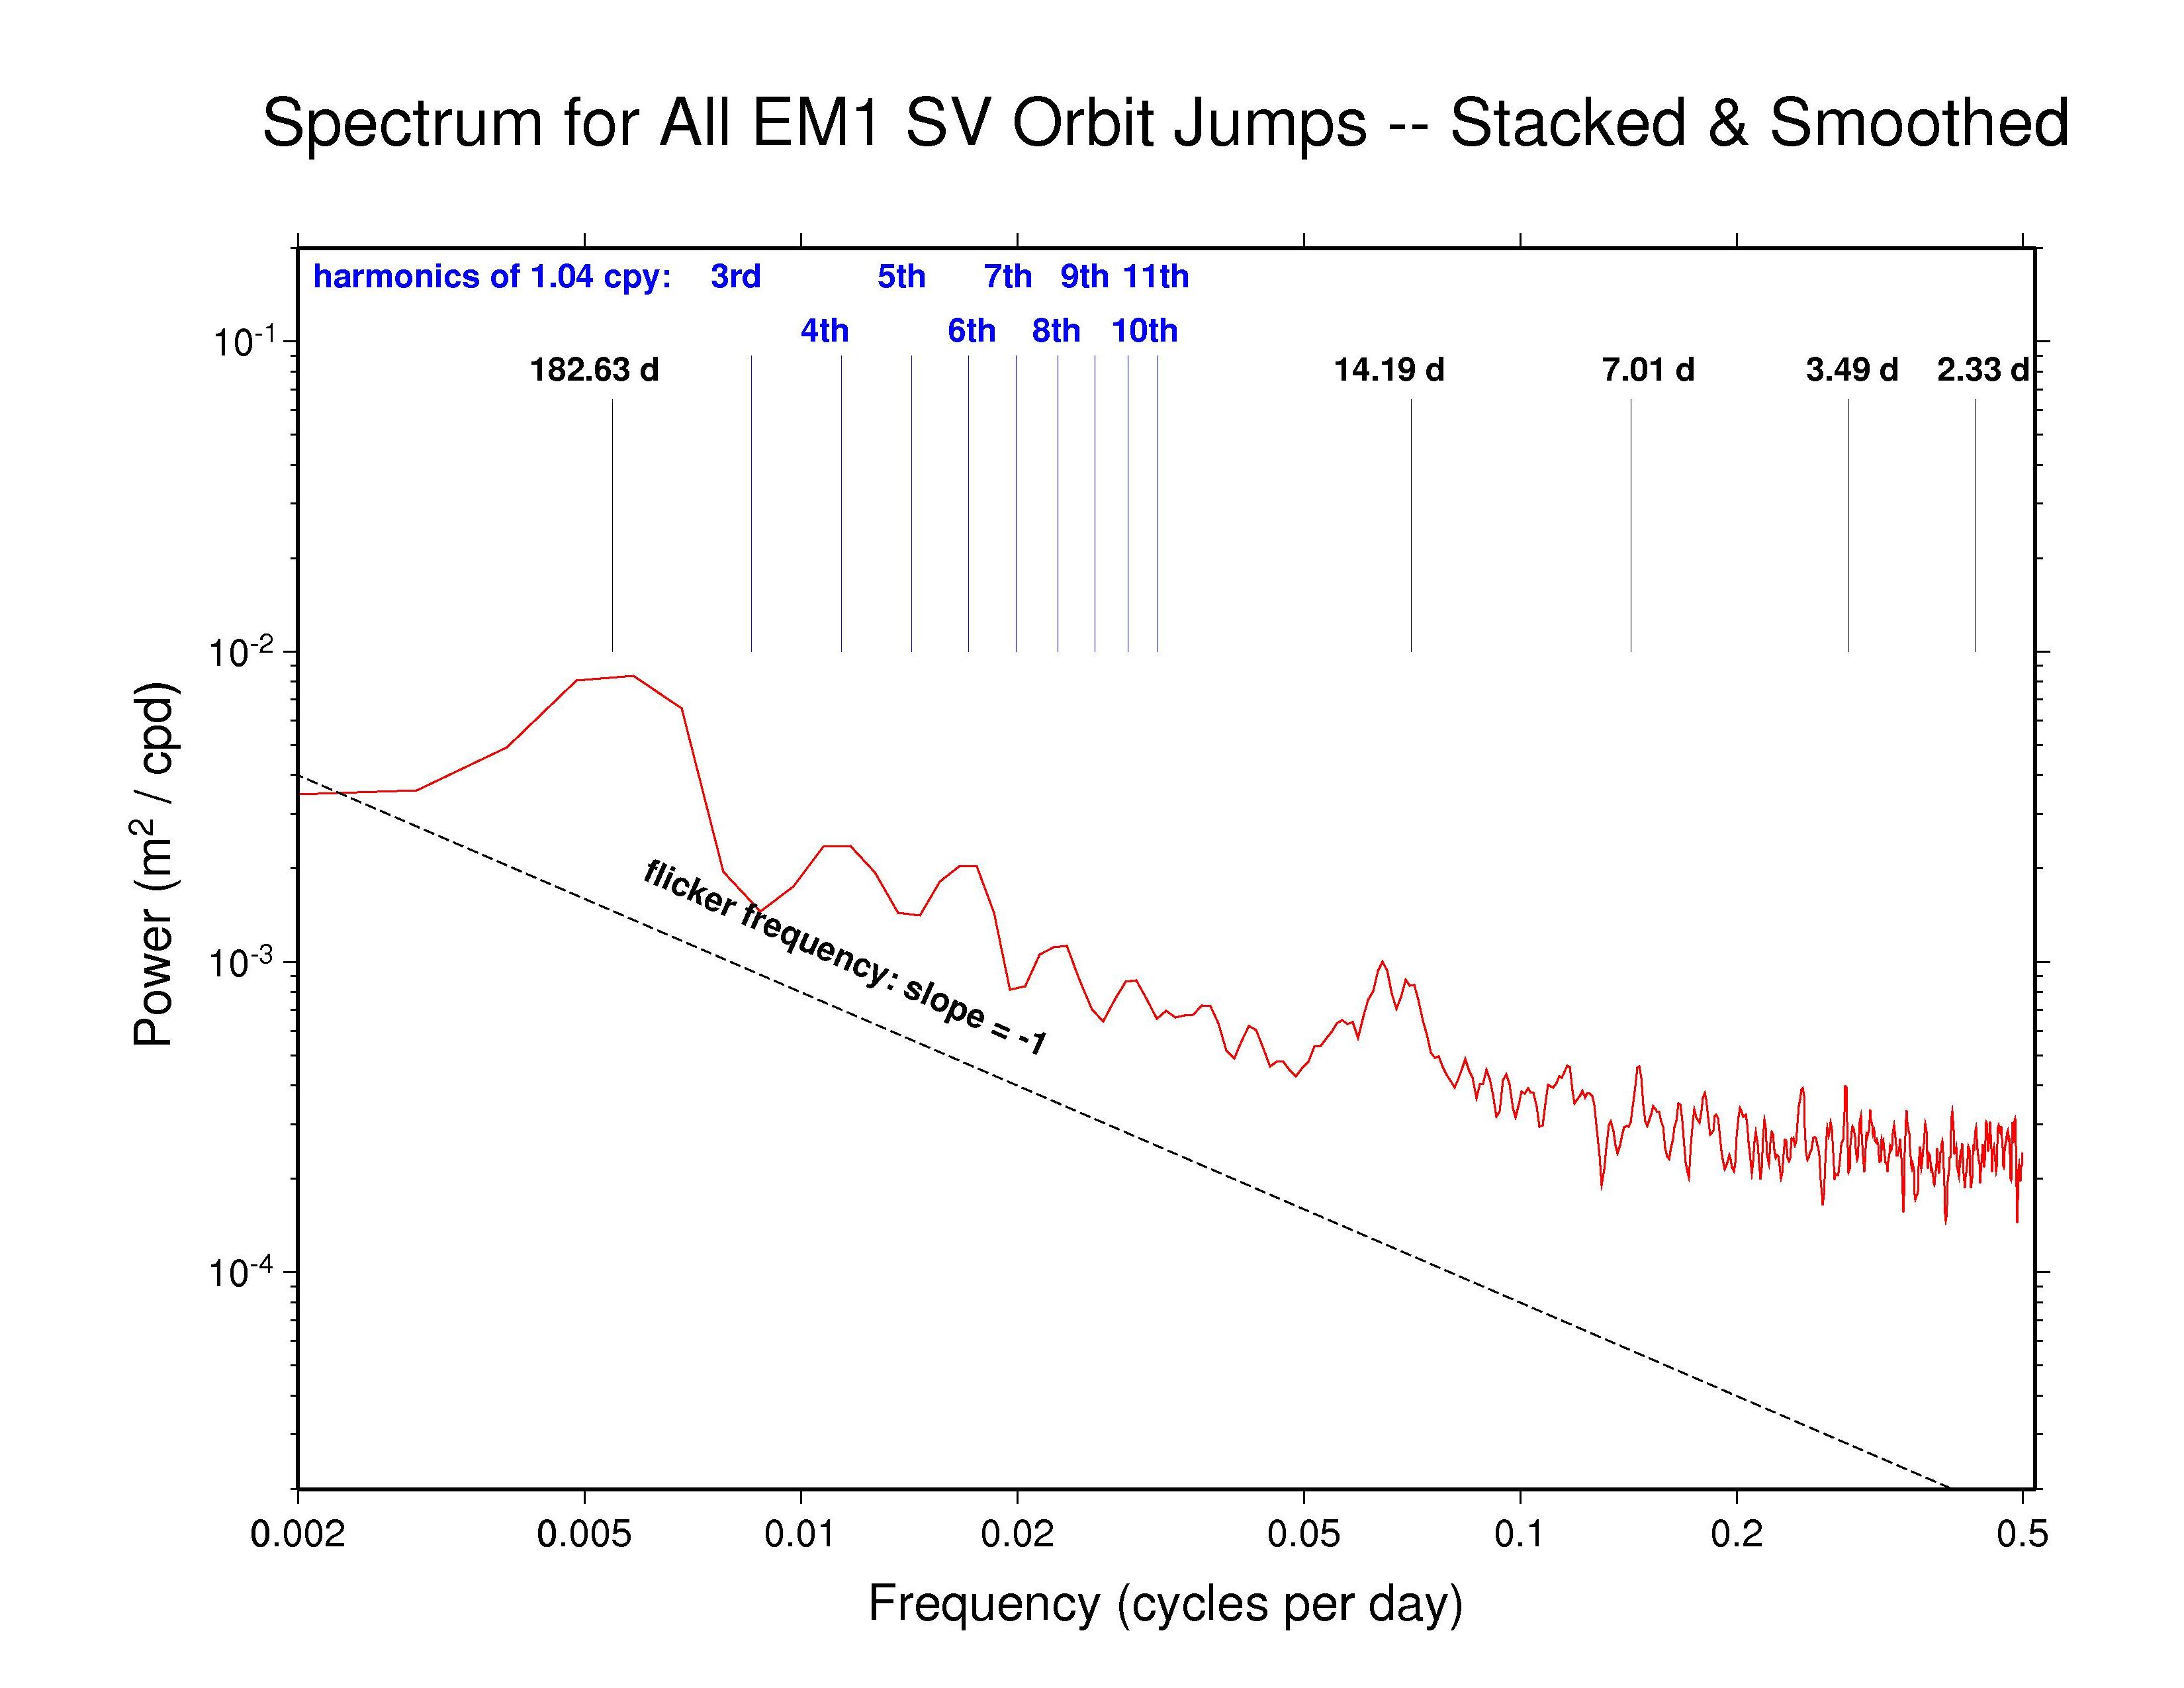 EMR orbit discontinuity spectra